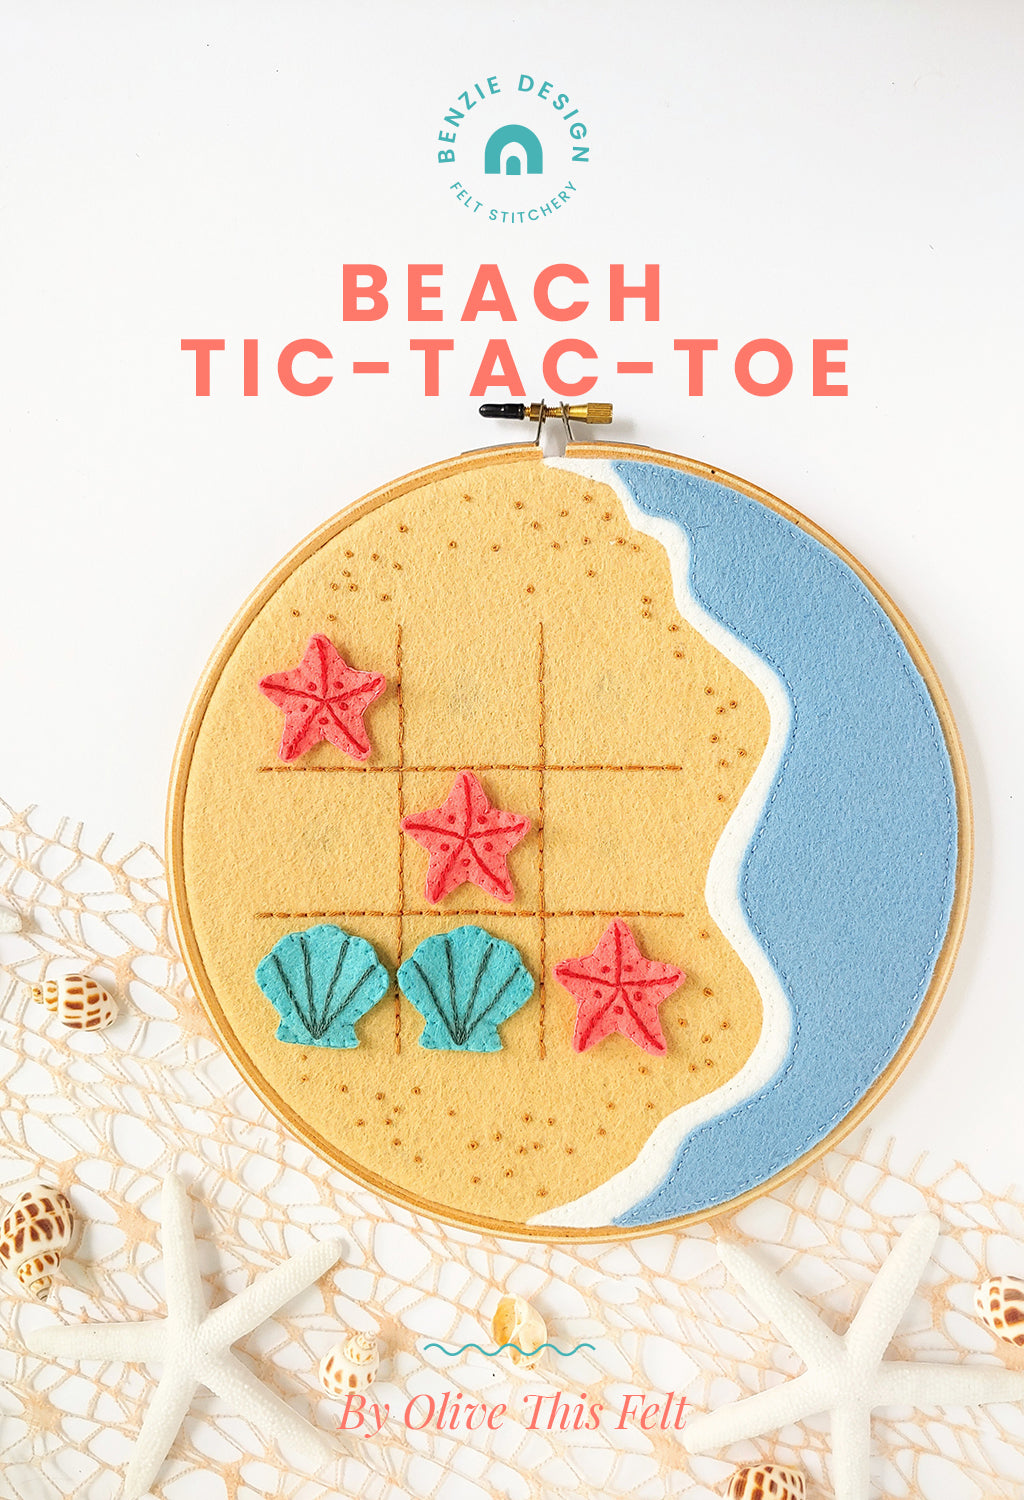 Design Tic-Tac-Toe Game